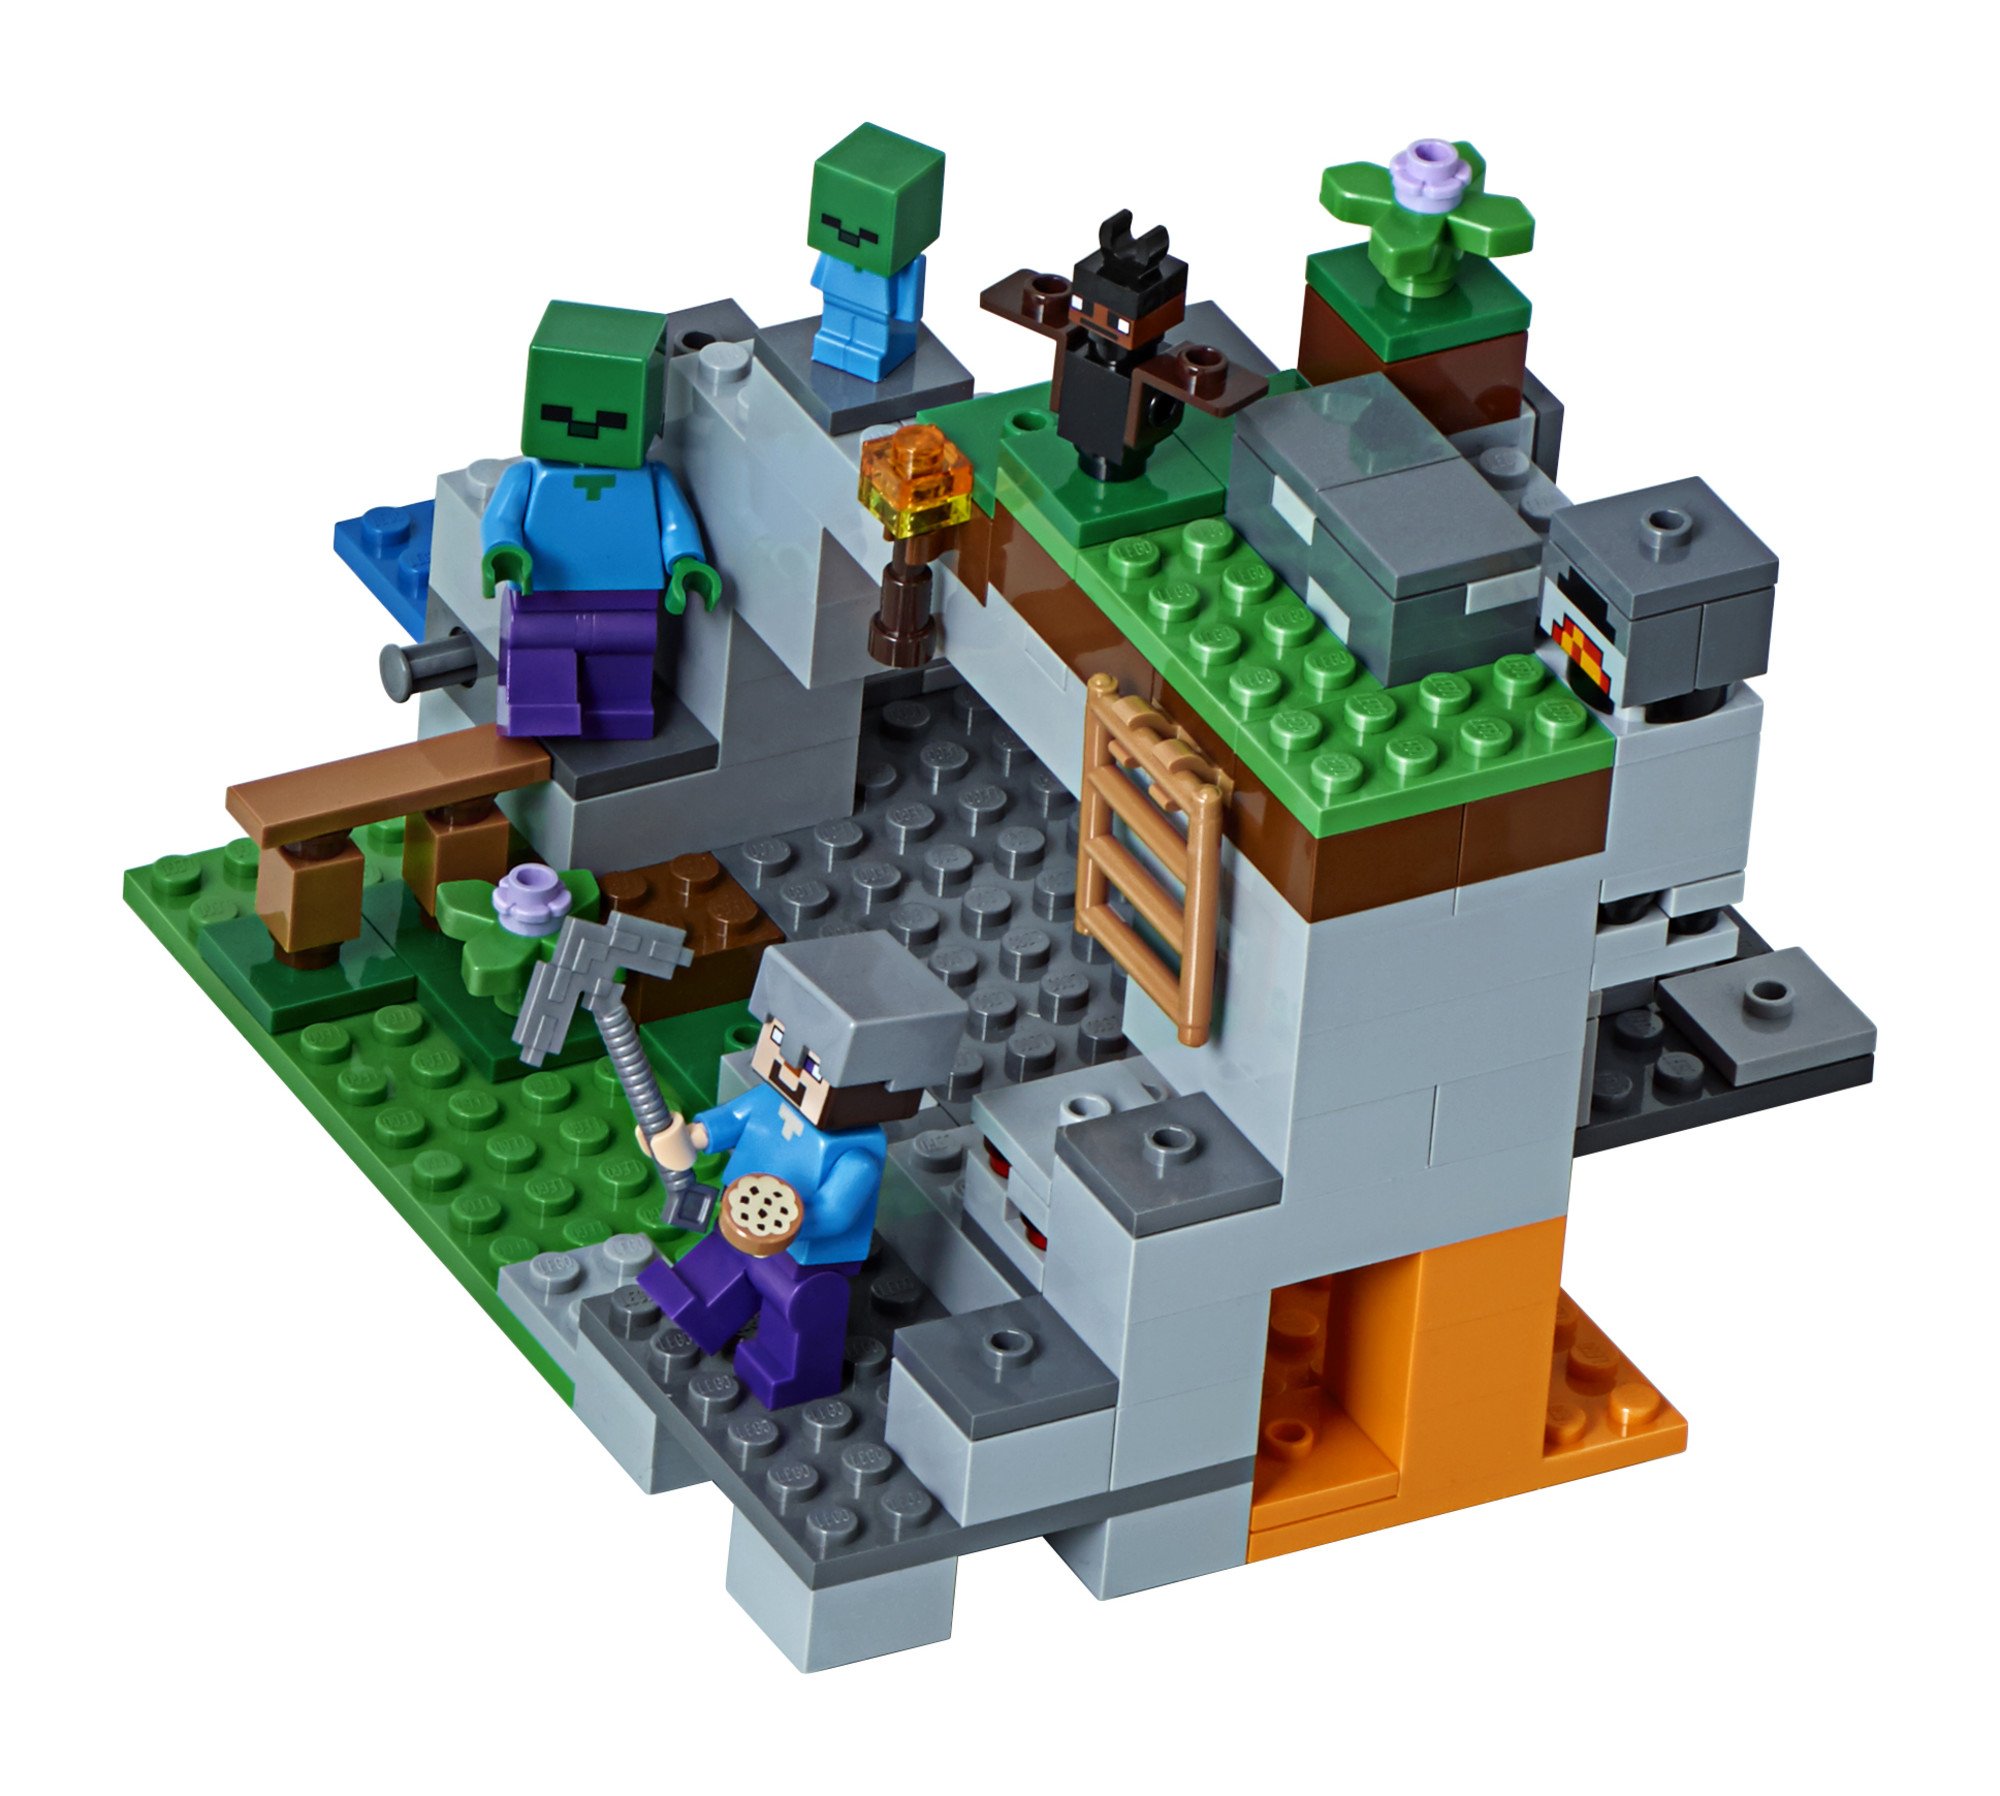 Cheap Lego Minecraft, find Lego Minecraft deals on line at Alibaba.com